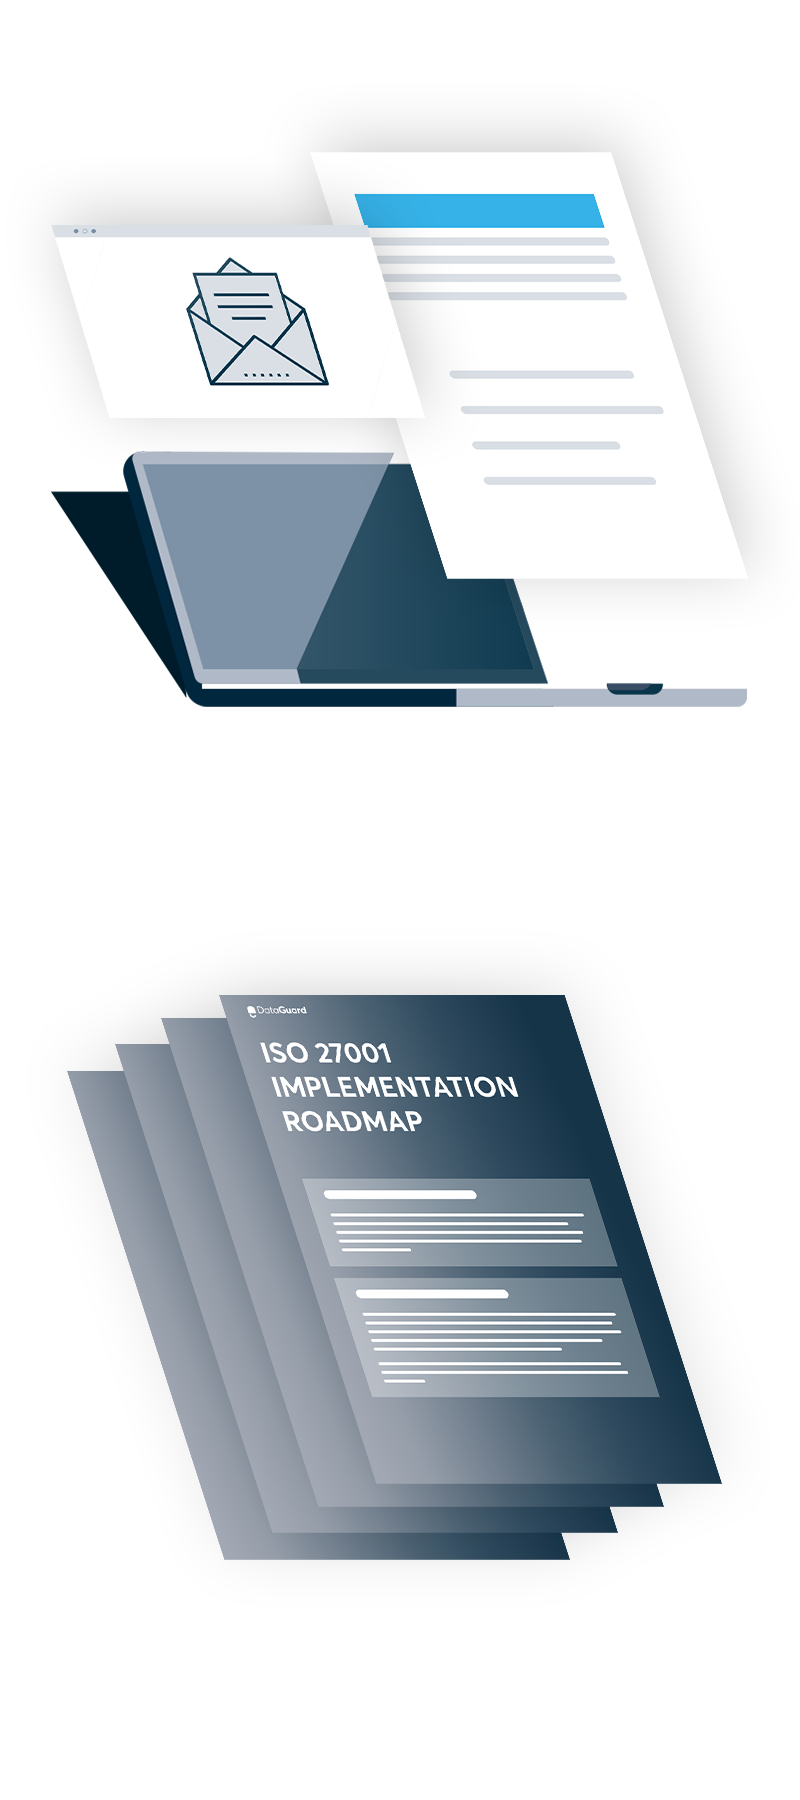 ISO 27001 Implementation Roadmap  